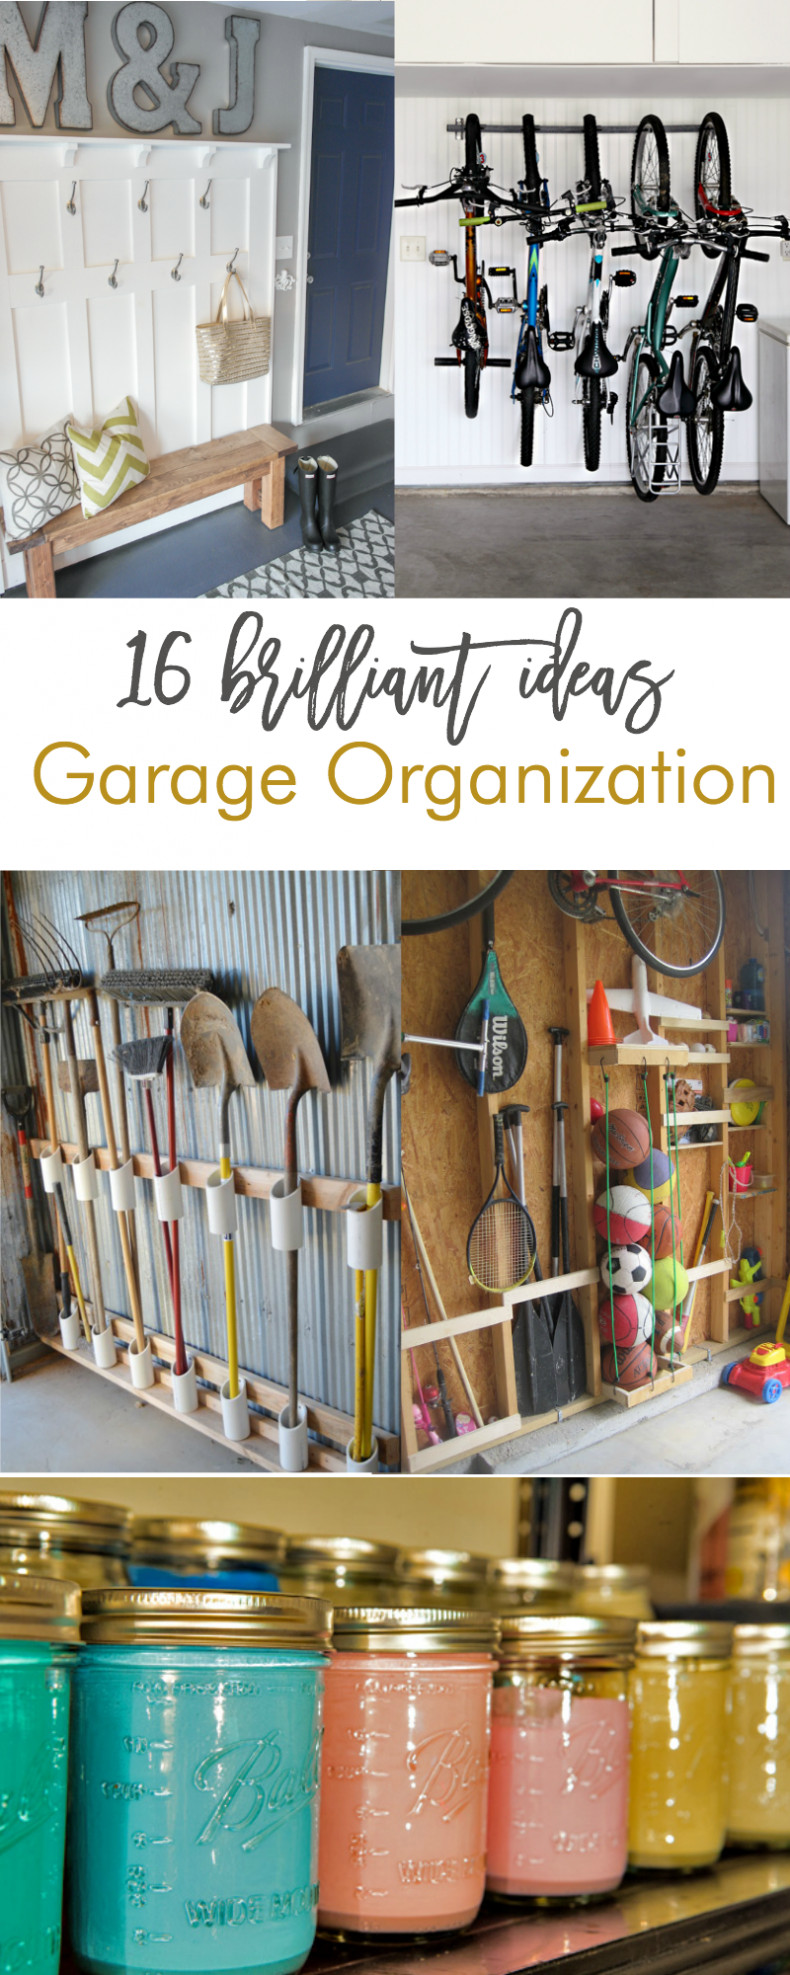 Garage Organization Plans
 16 Brilliant DIY Garage Organization Ideas